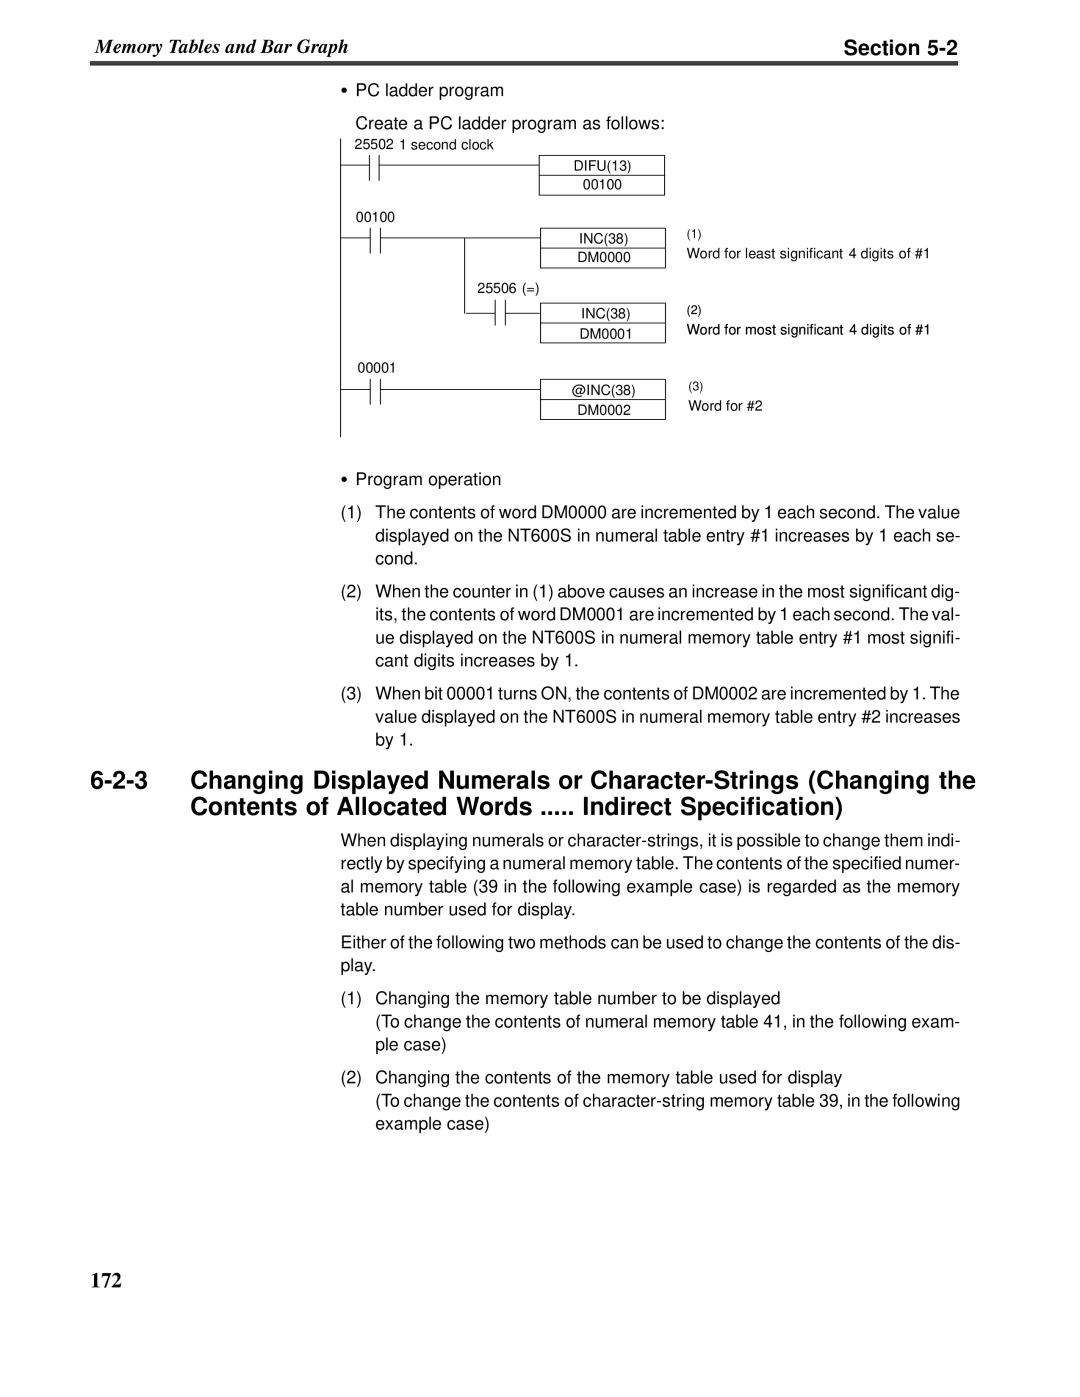 Omron V022-E3-1 operation manual Section, PC ladder program 